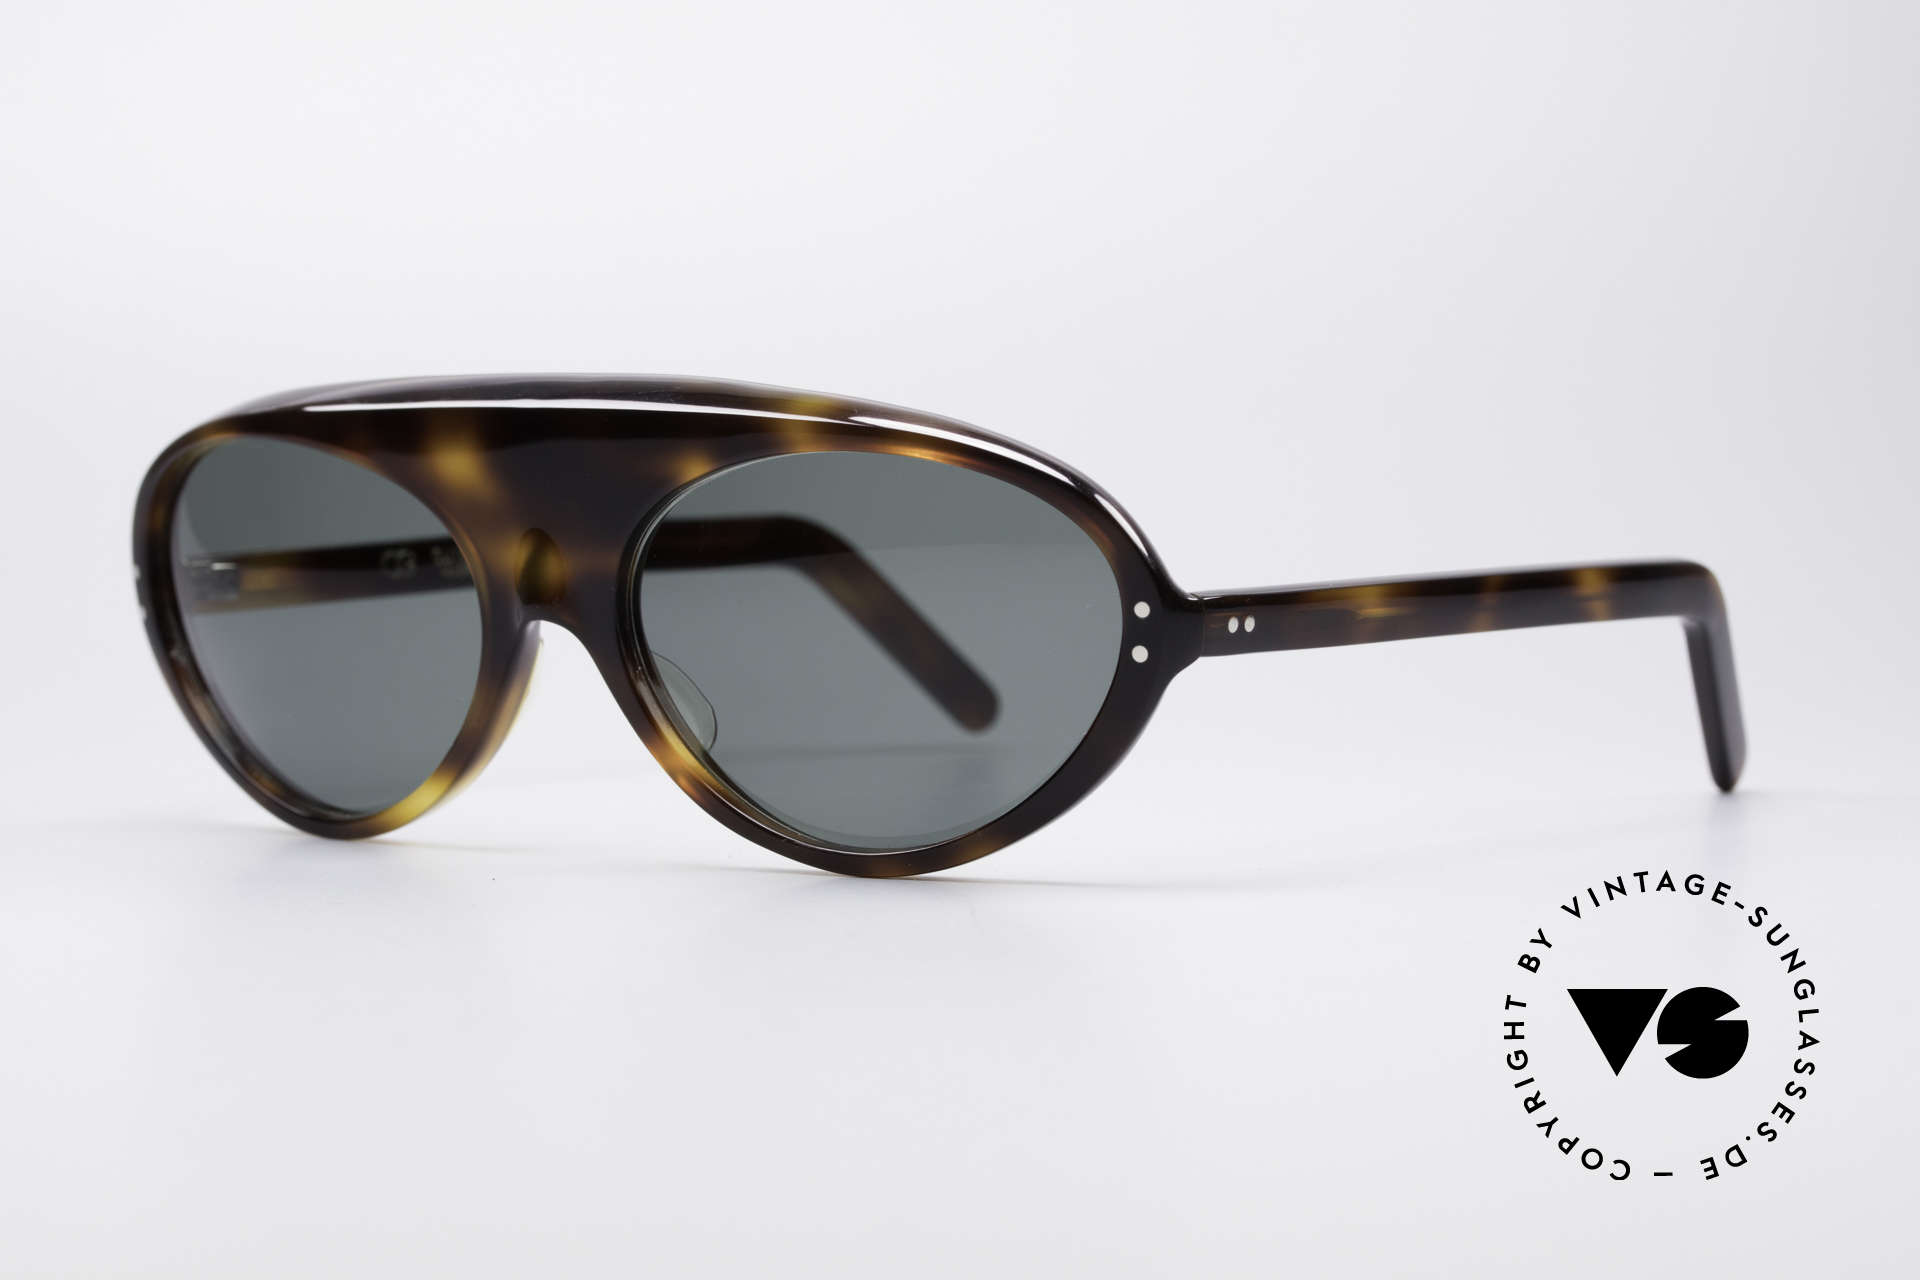 Sunglasses Oliver Goldsmith Vintage 60's Shades